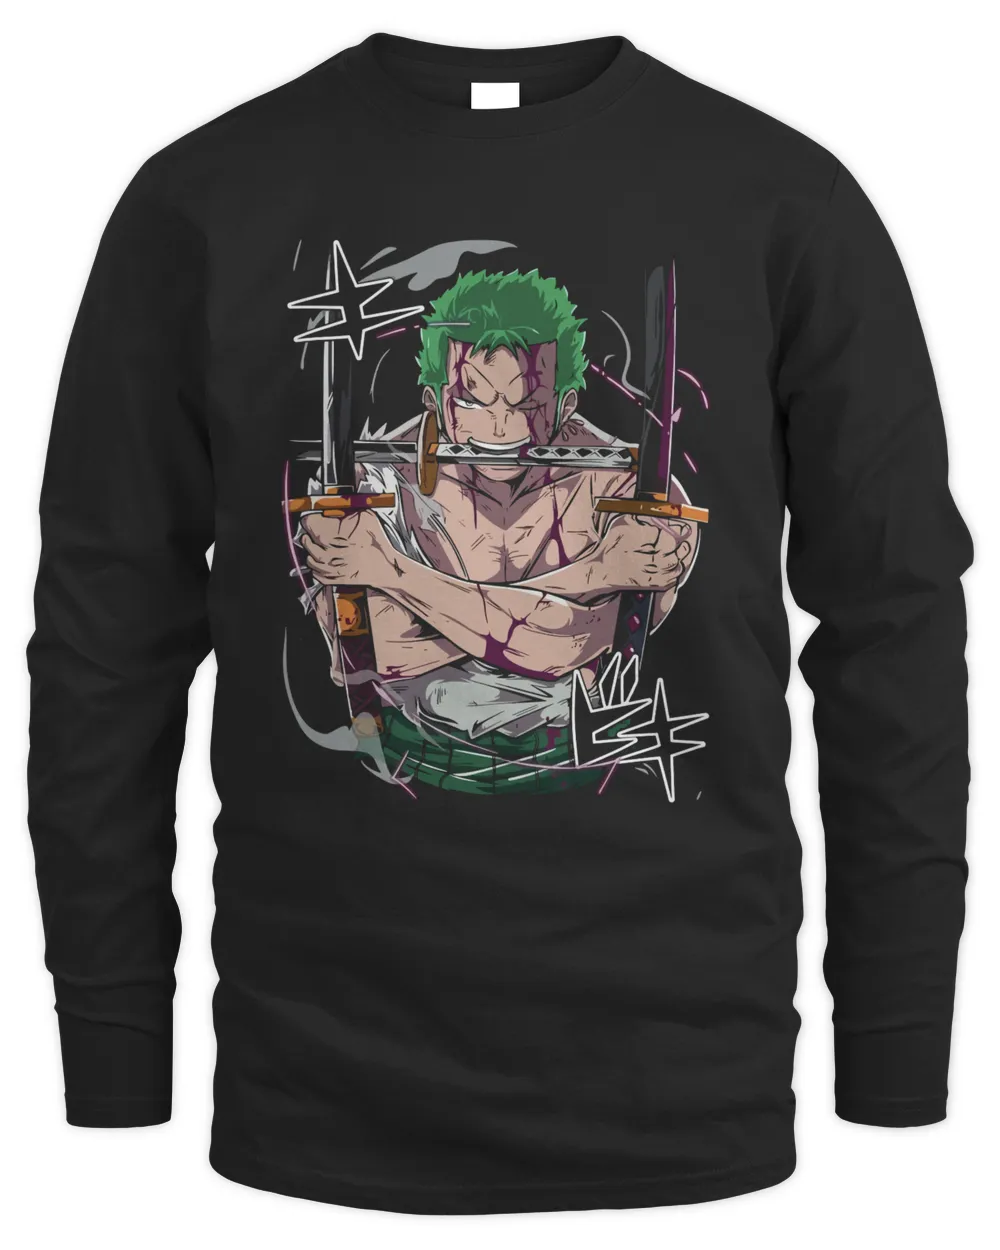 Anime Manga Series T-Shirt, One Anime Piece Sweatshirt, Hoodie, Anime Tee For Fans, The Warrior Anime Zoro T-Shirt